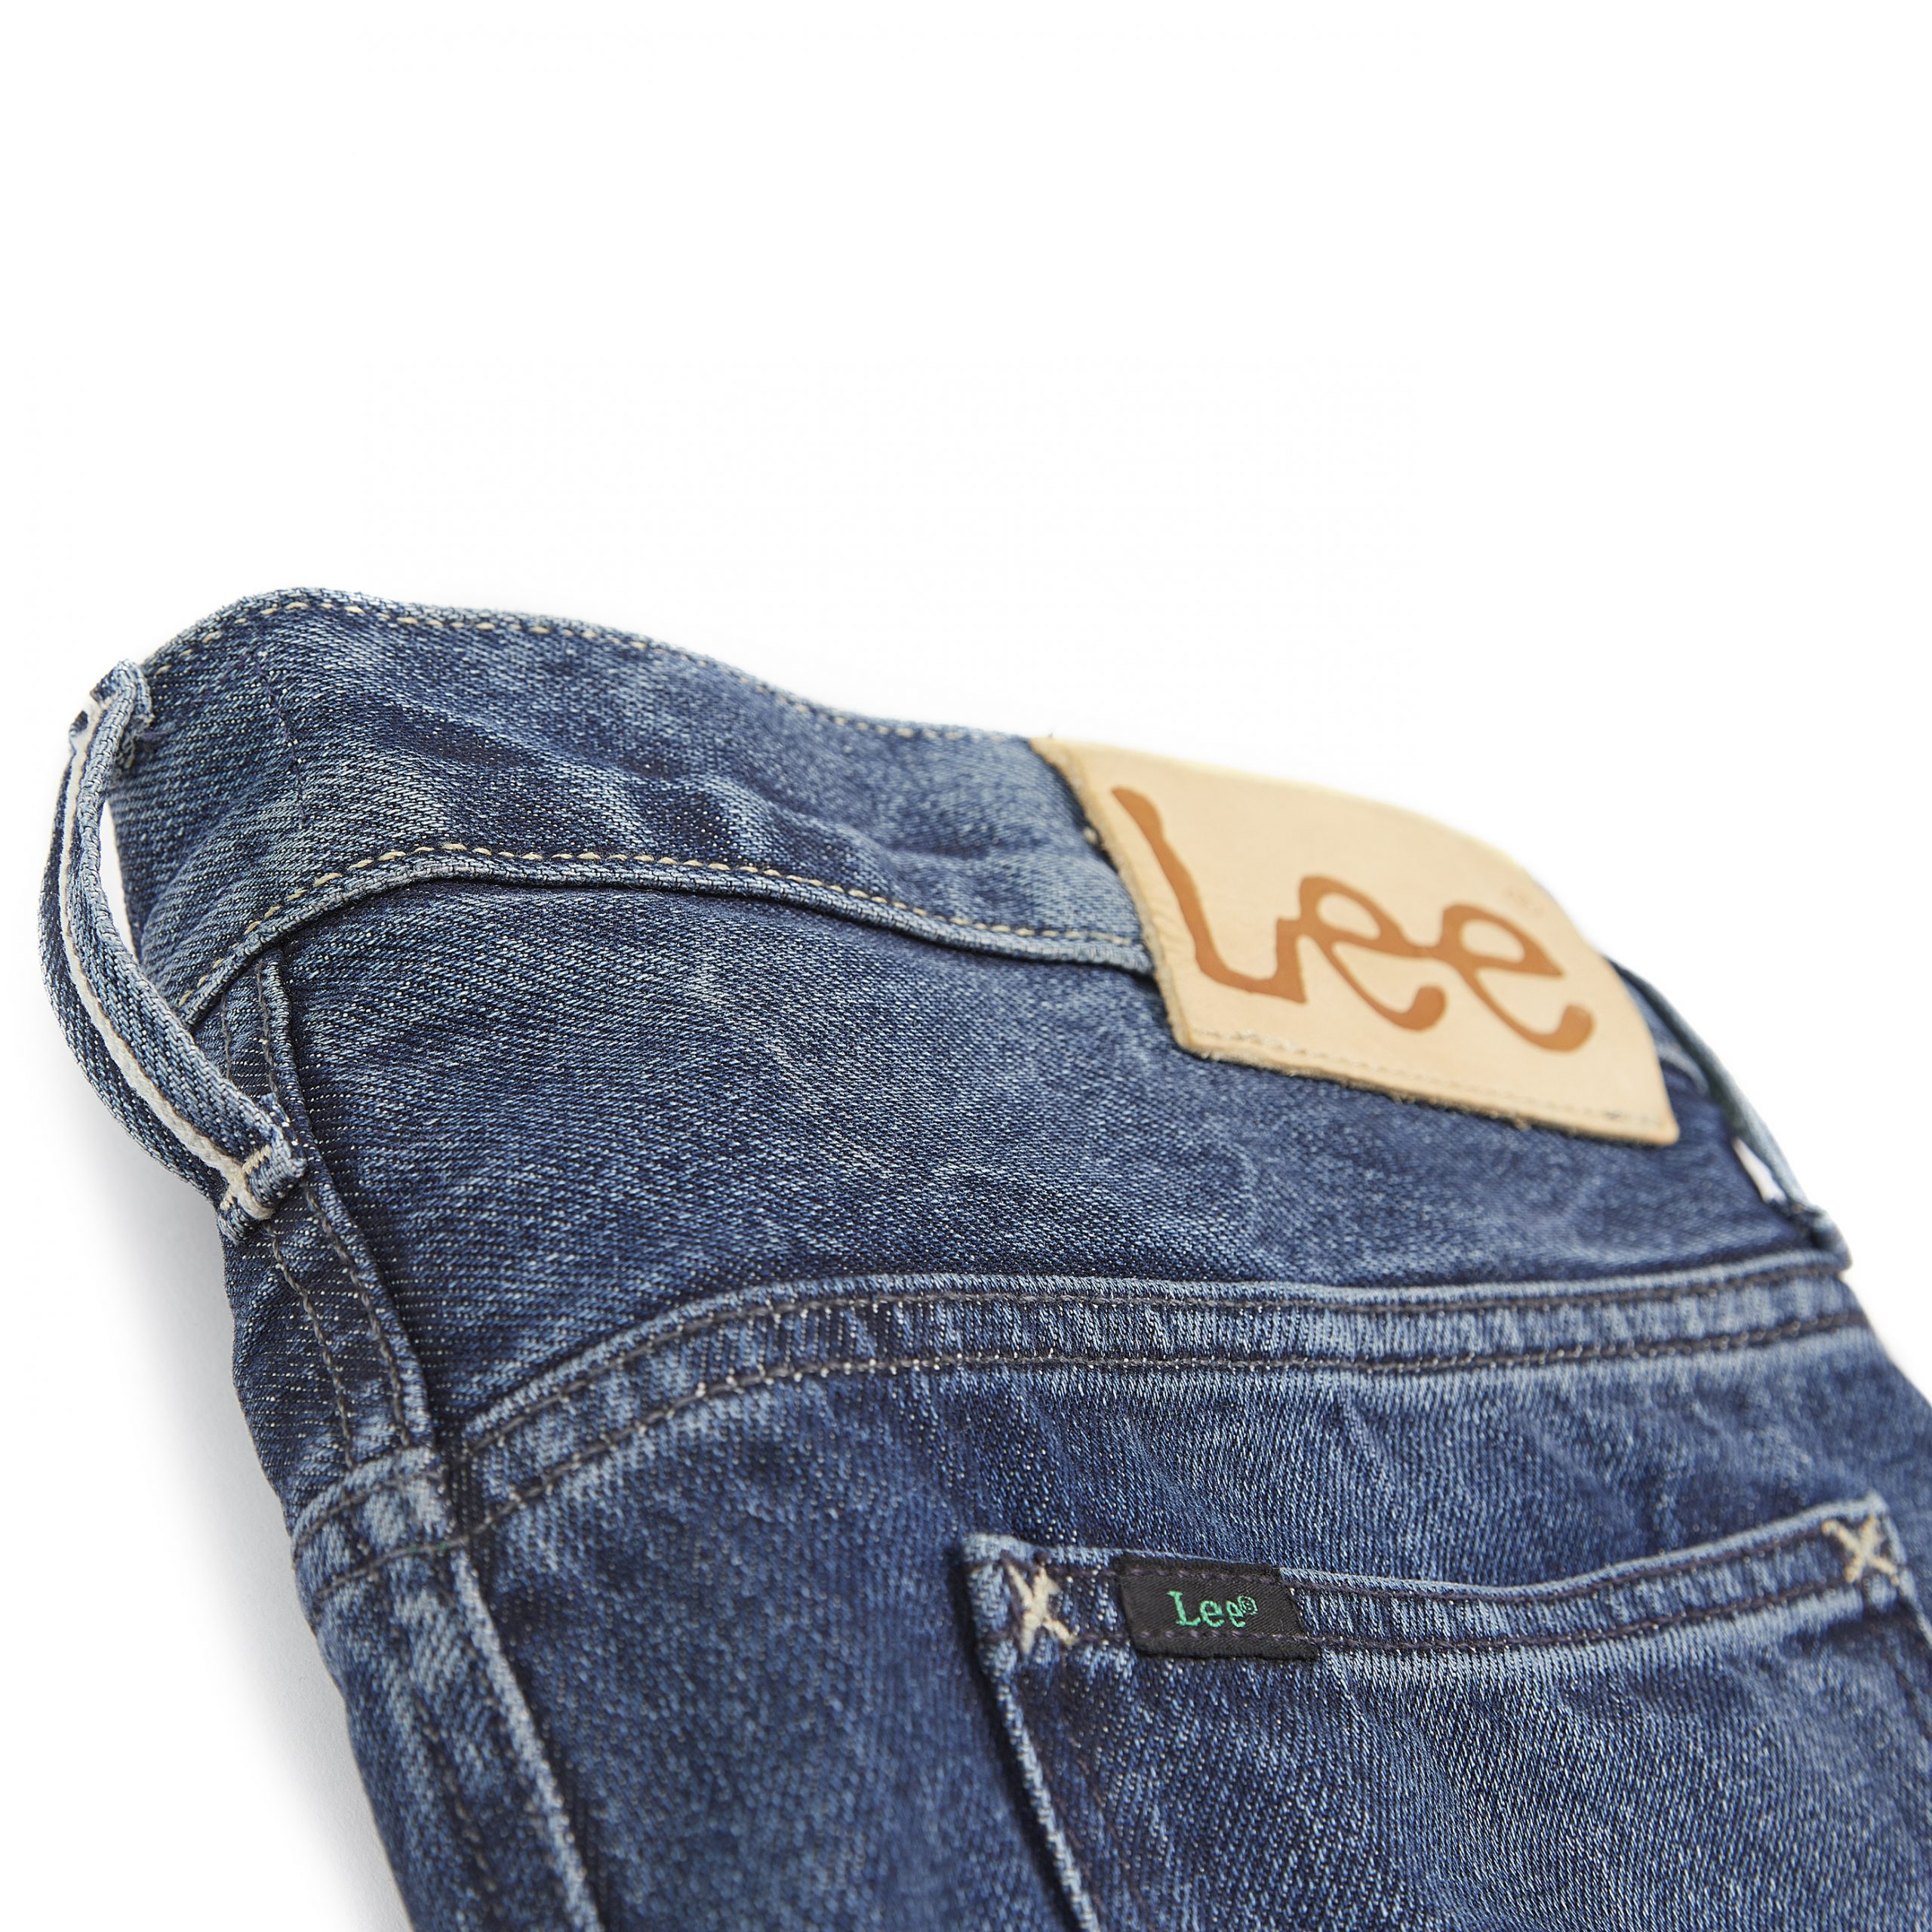 Briljant kast geïrriteerd raken Lee Jeans introduces 'For A World That Works' Initiative - Denimandjeans |  Global Trends, News and Reports | Worldwide